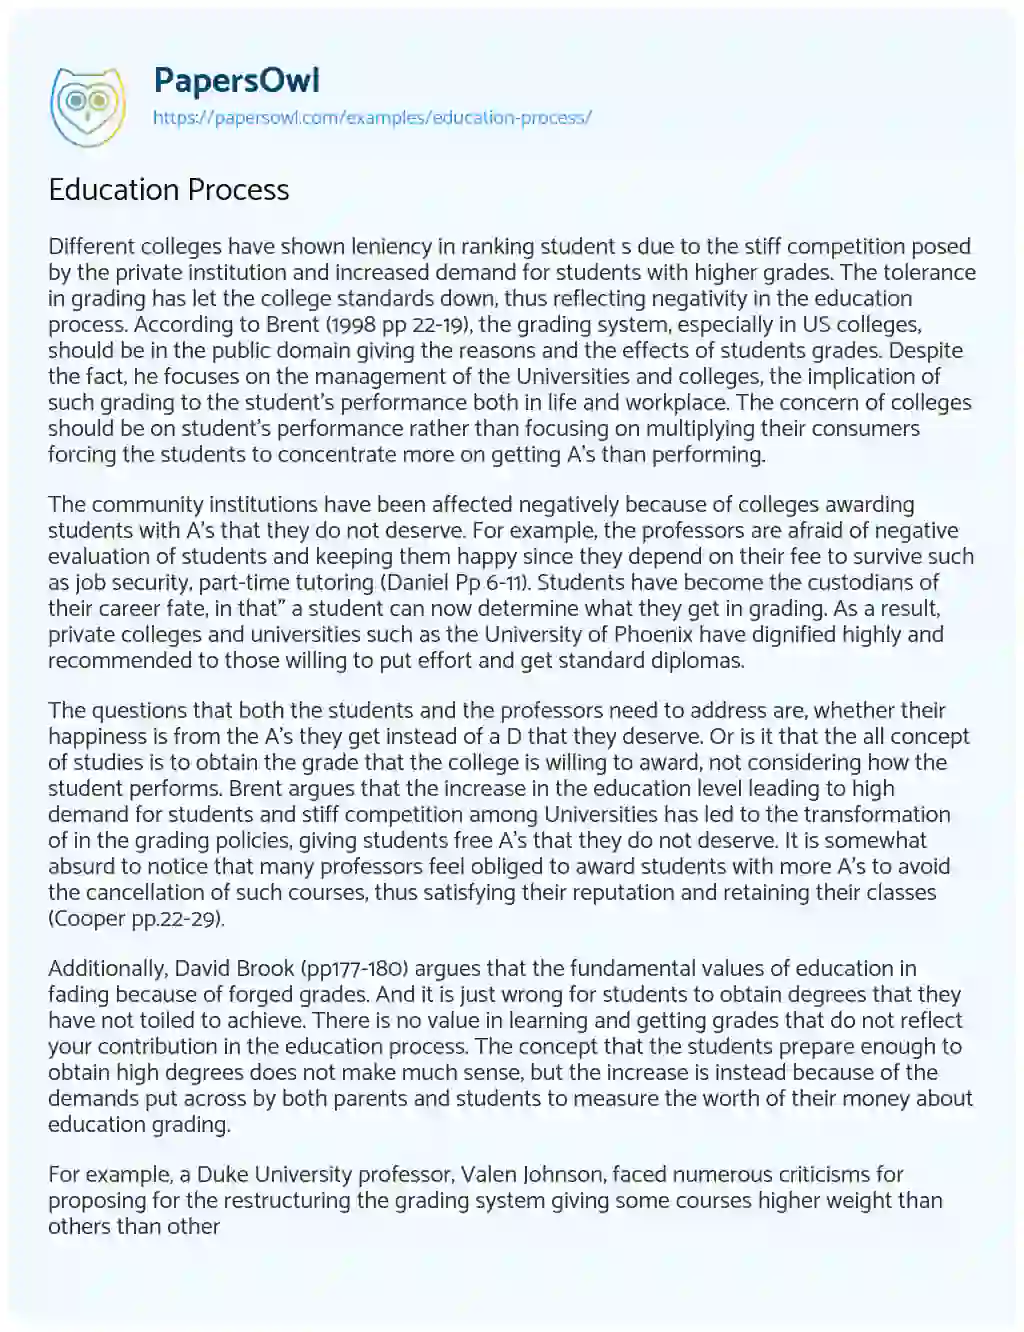 Essay on Education Process